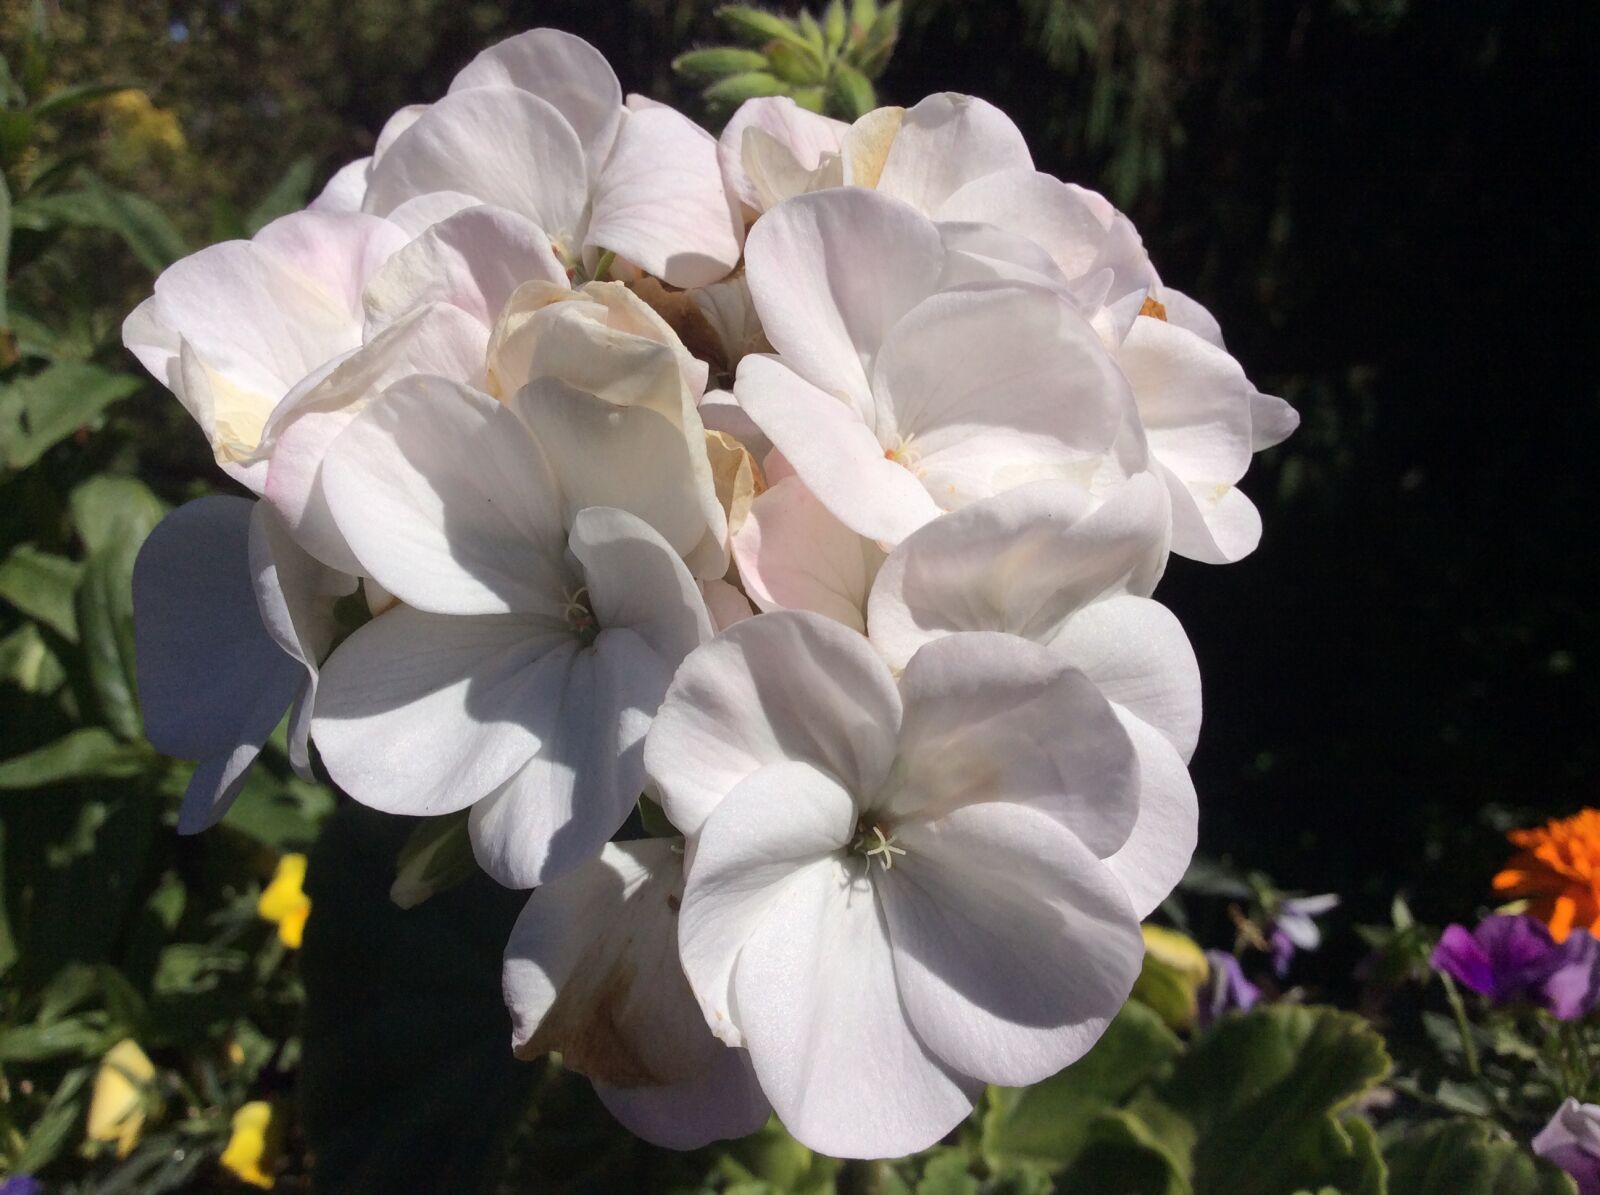 iPad mini 2 back camera 3.3mm f/2.4 sample photo. Flowers, garden, and white photography